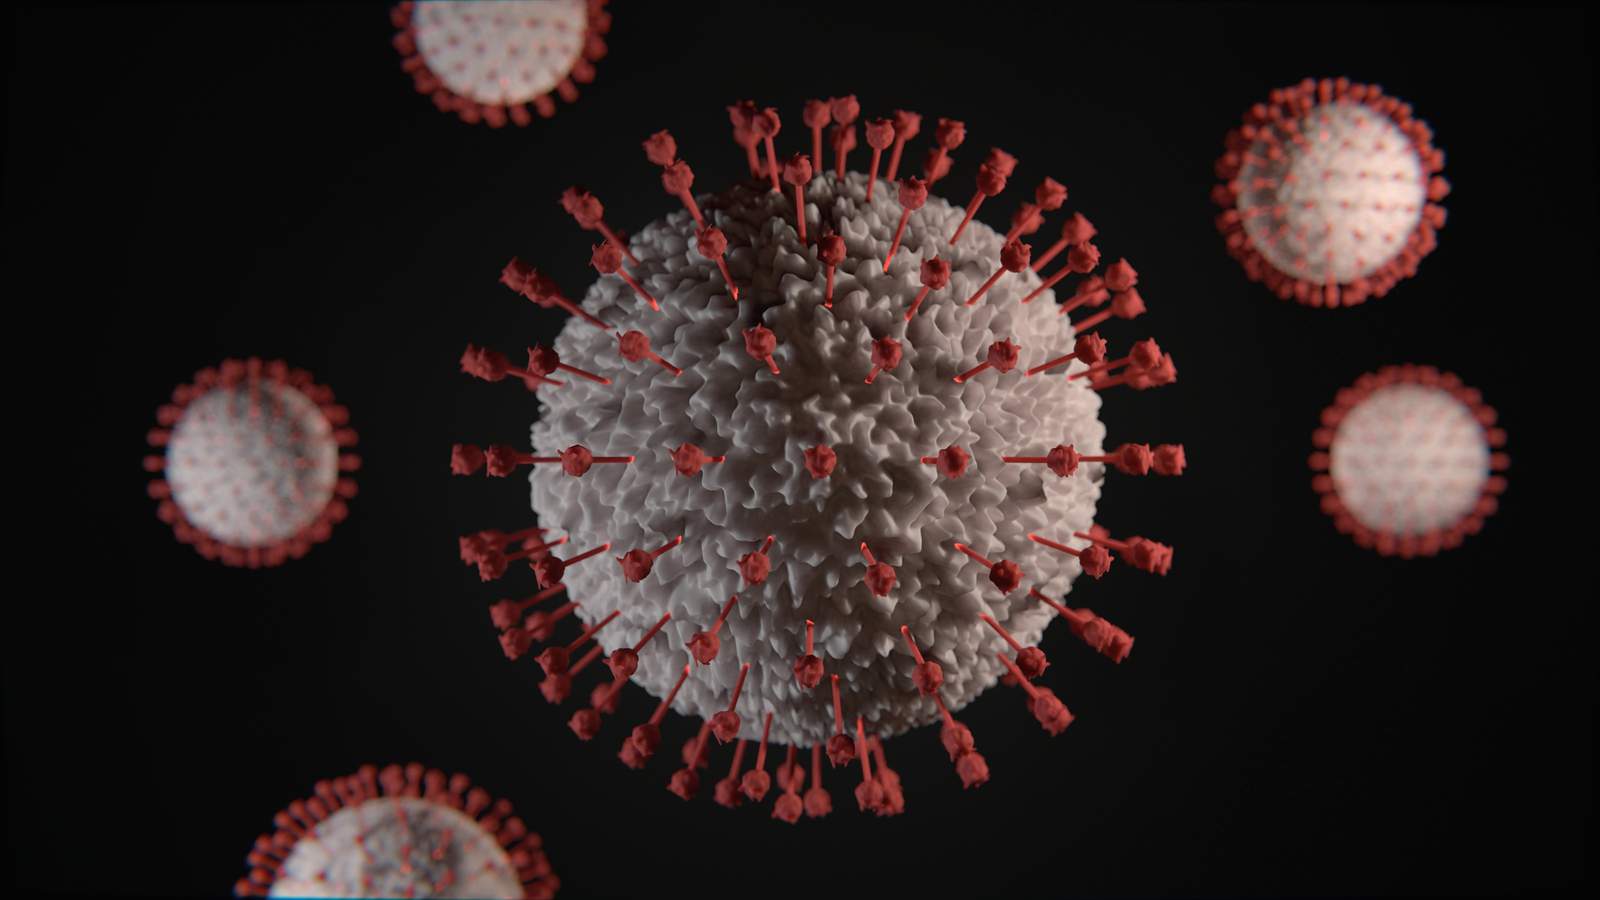 Debunking 3 popular conspiracies about coronavirus